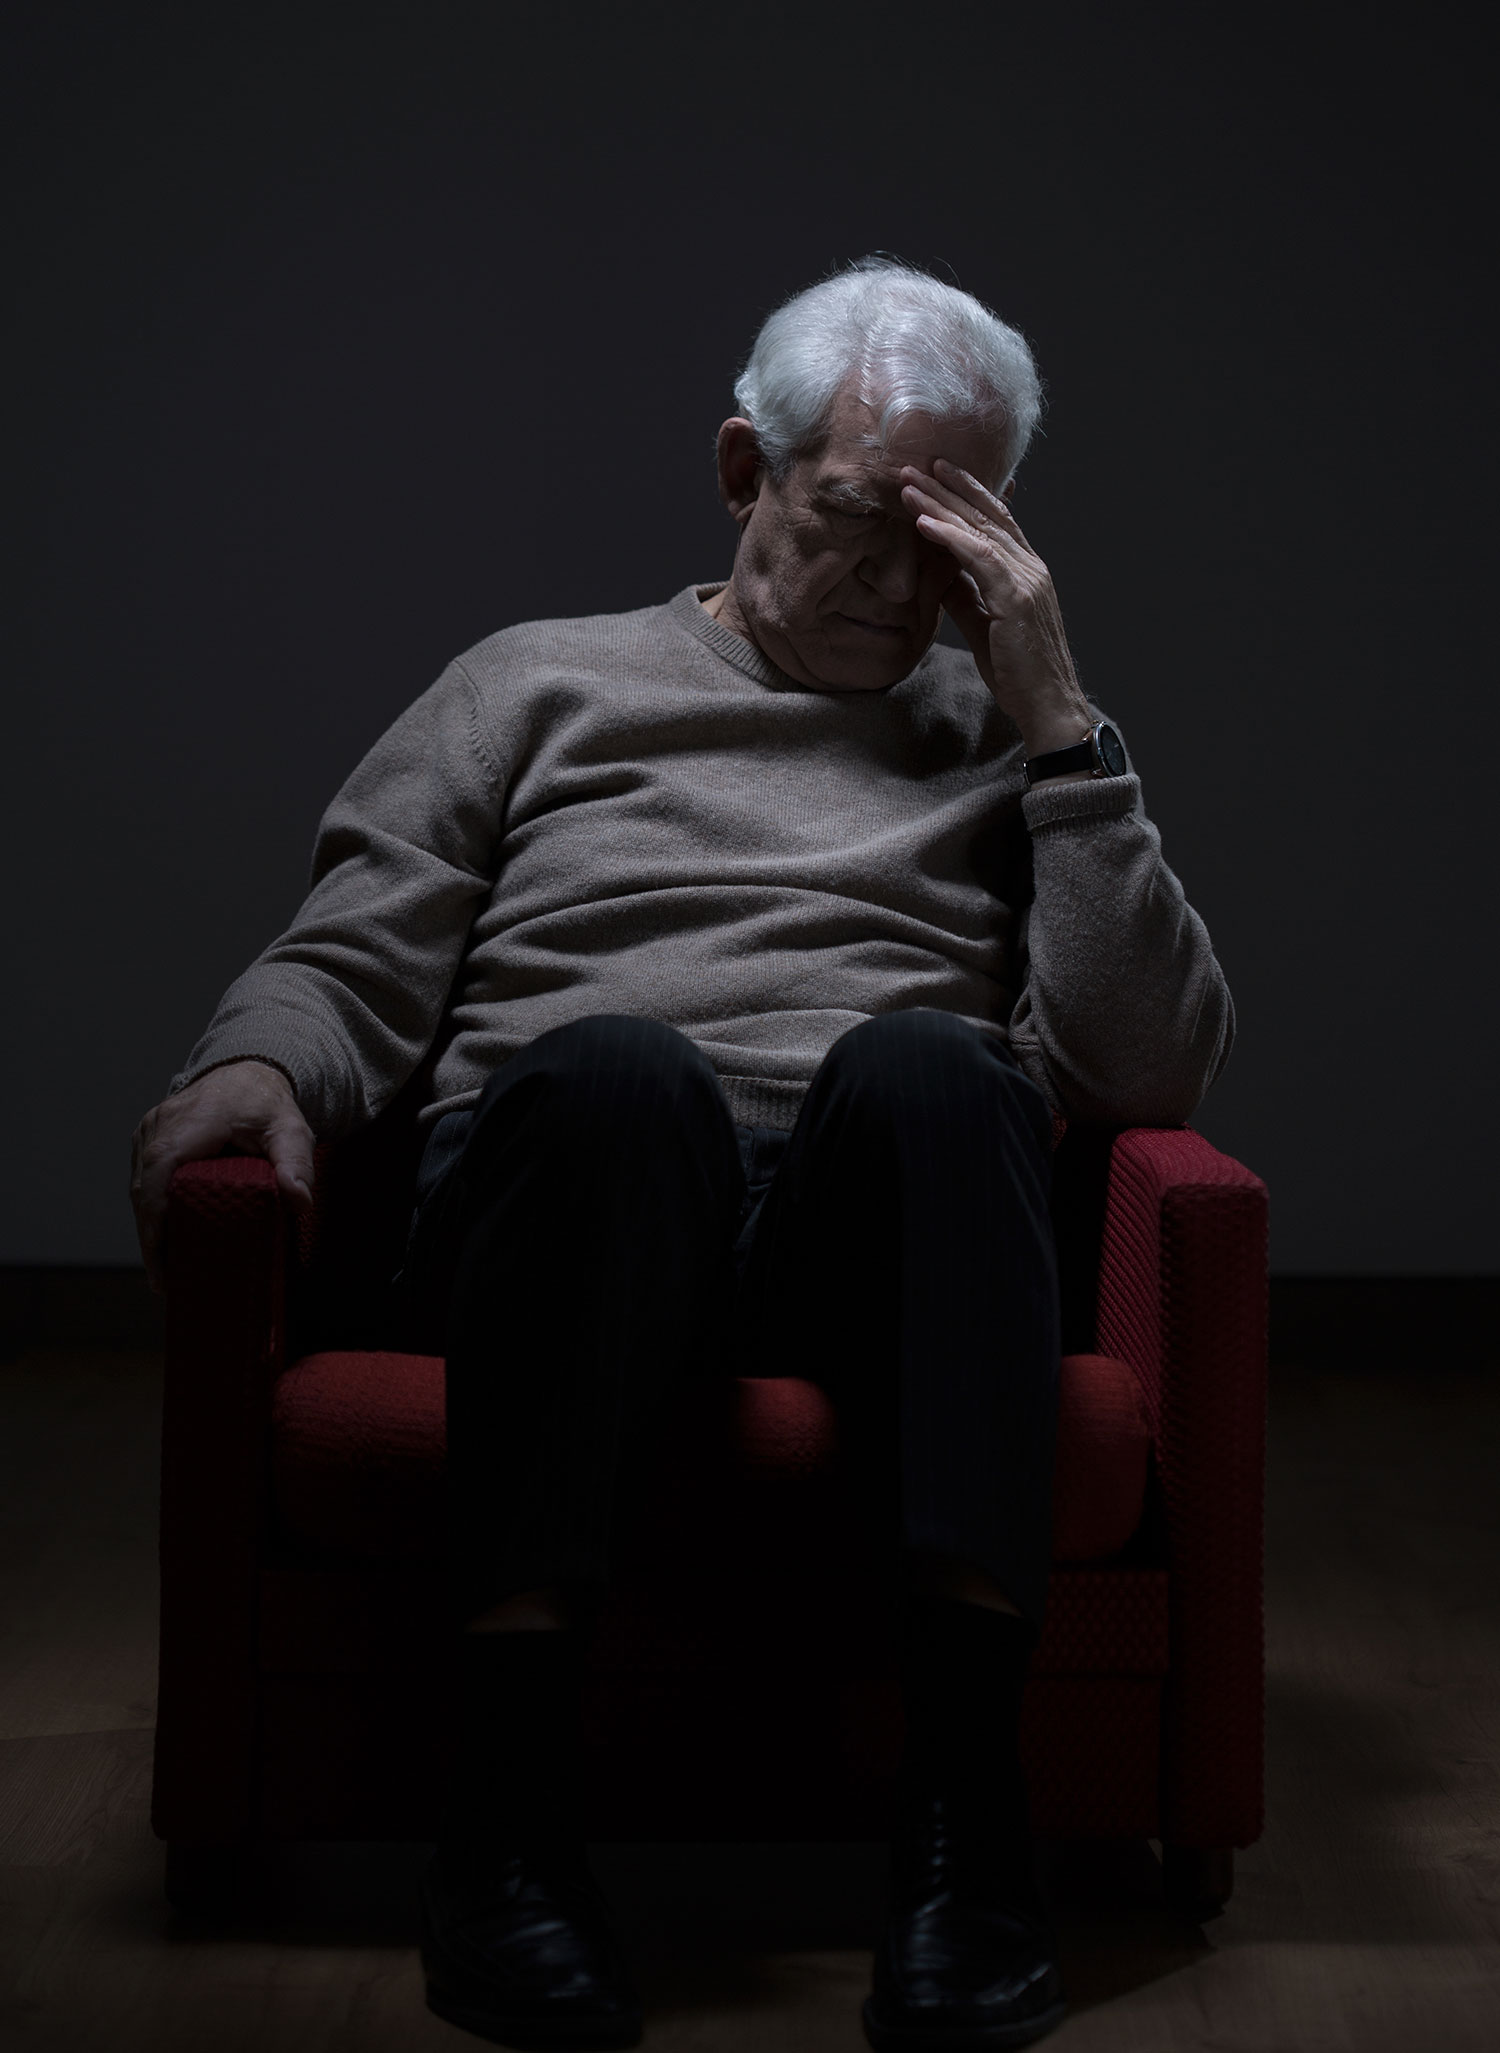 Alter Mann auf rotem Stuhl in dunklem Raum